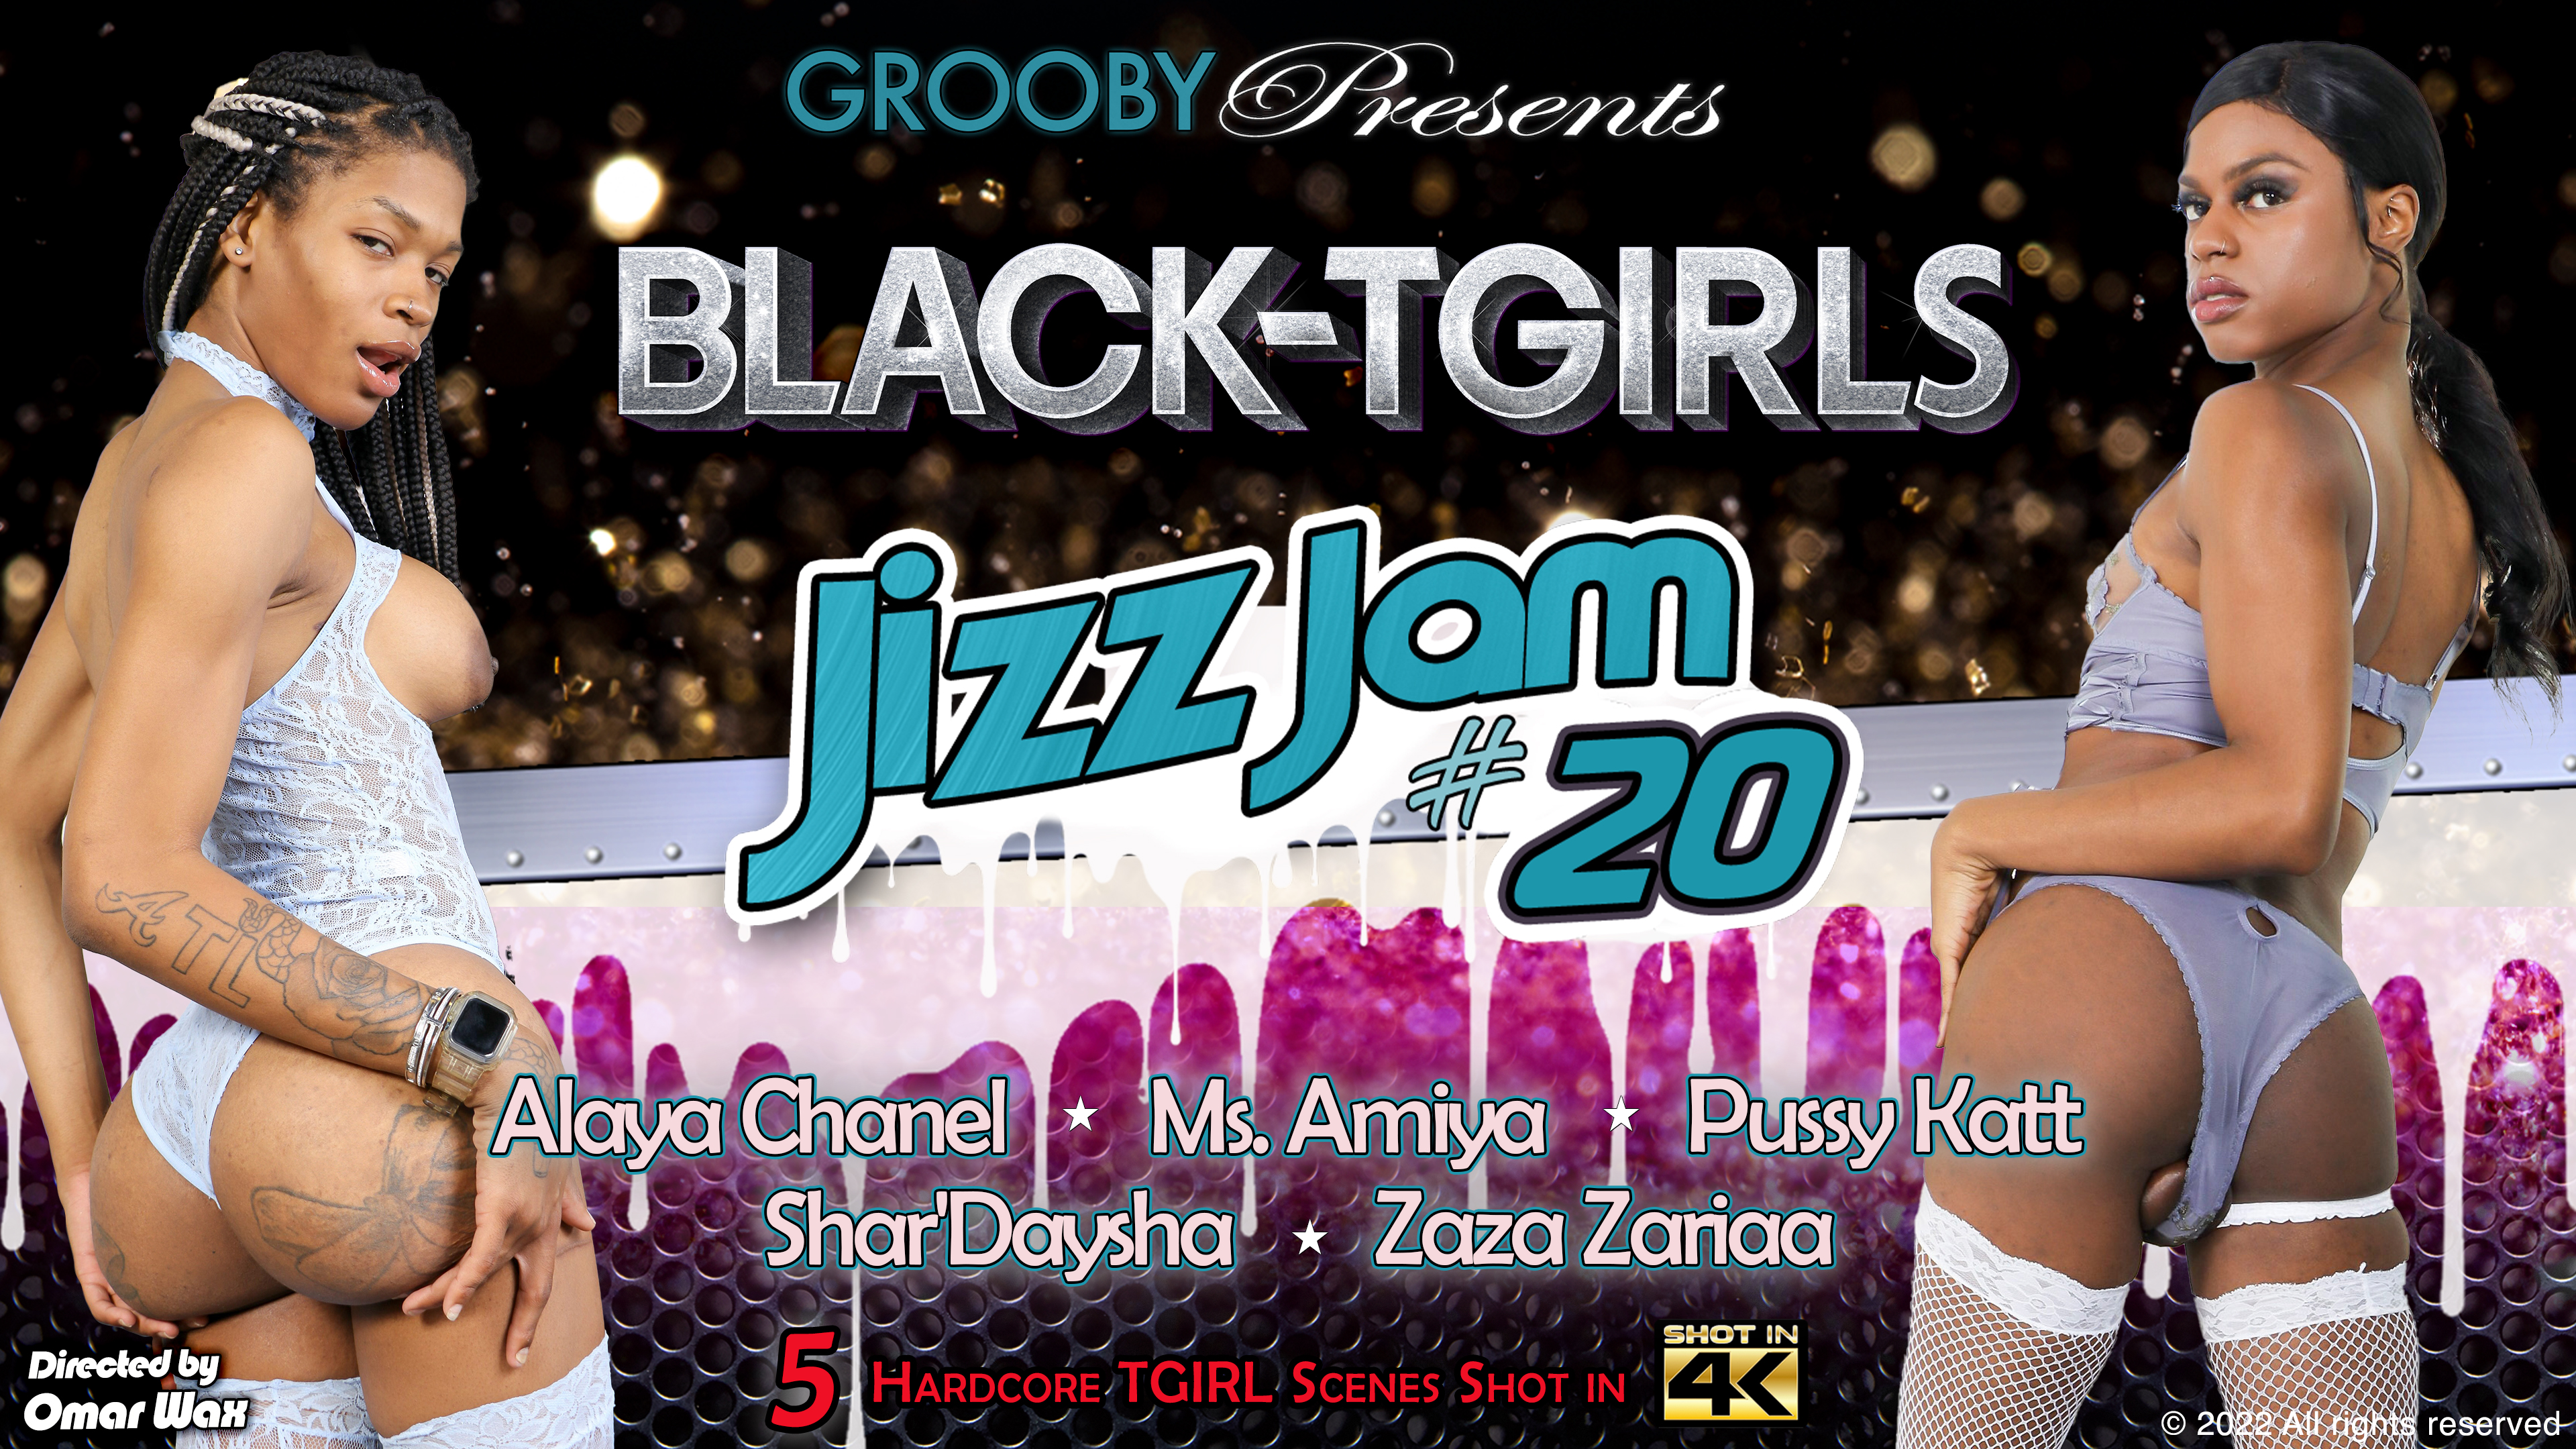 Black-Tgirls Jizz Jam #20 DVD Trailer